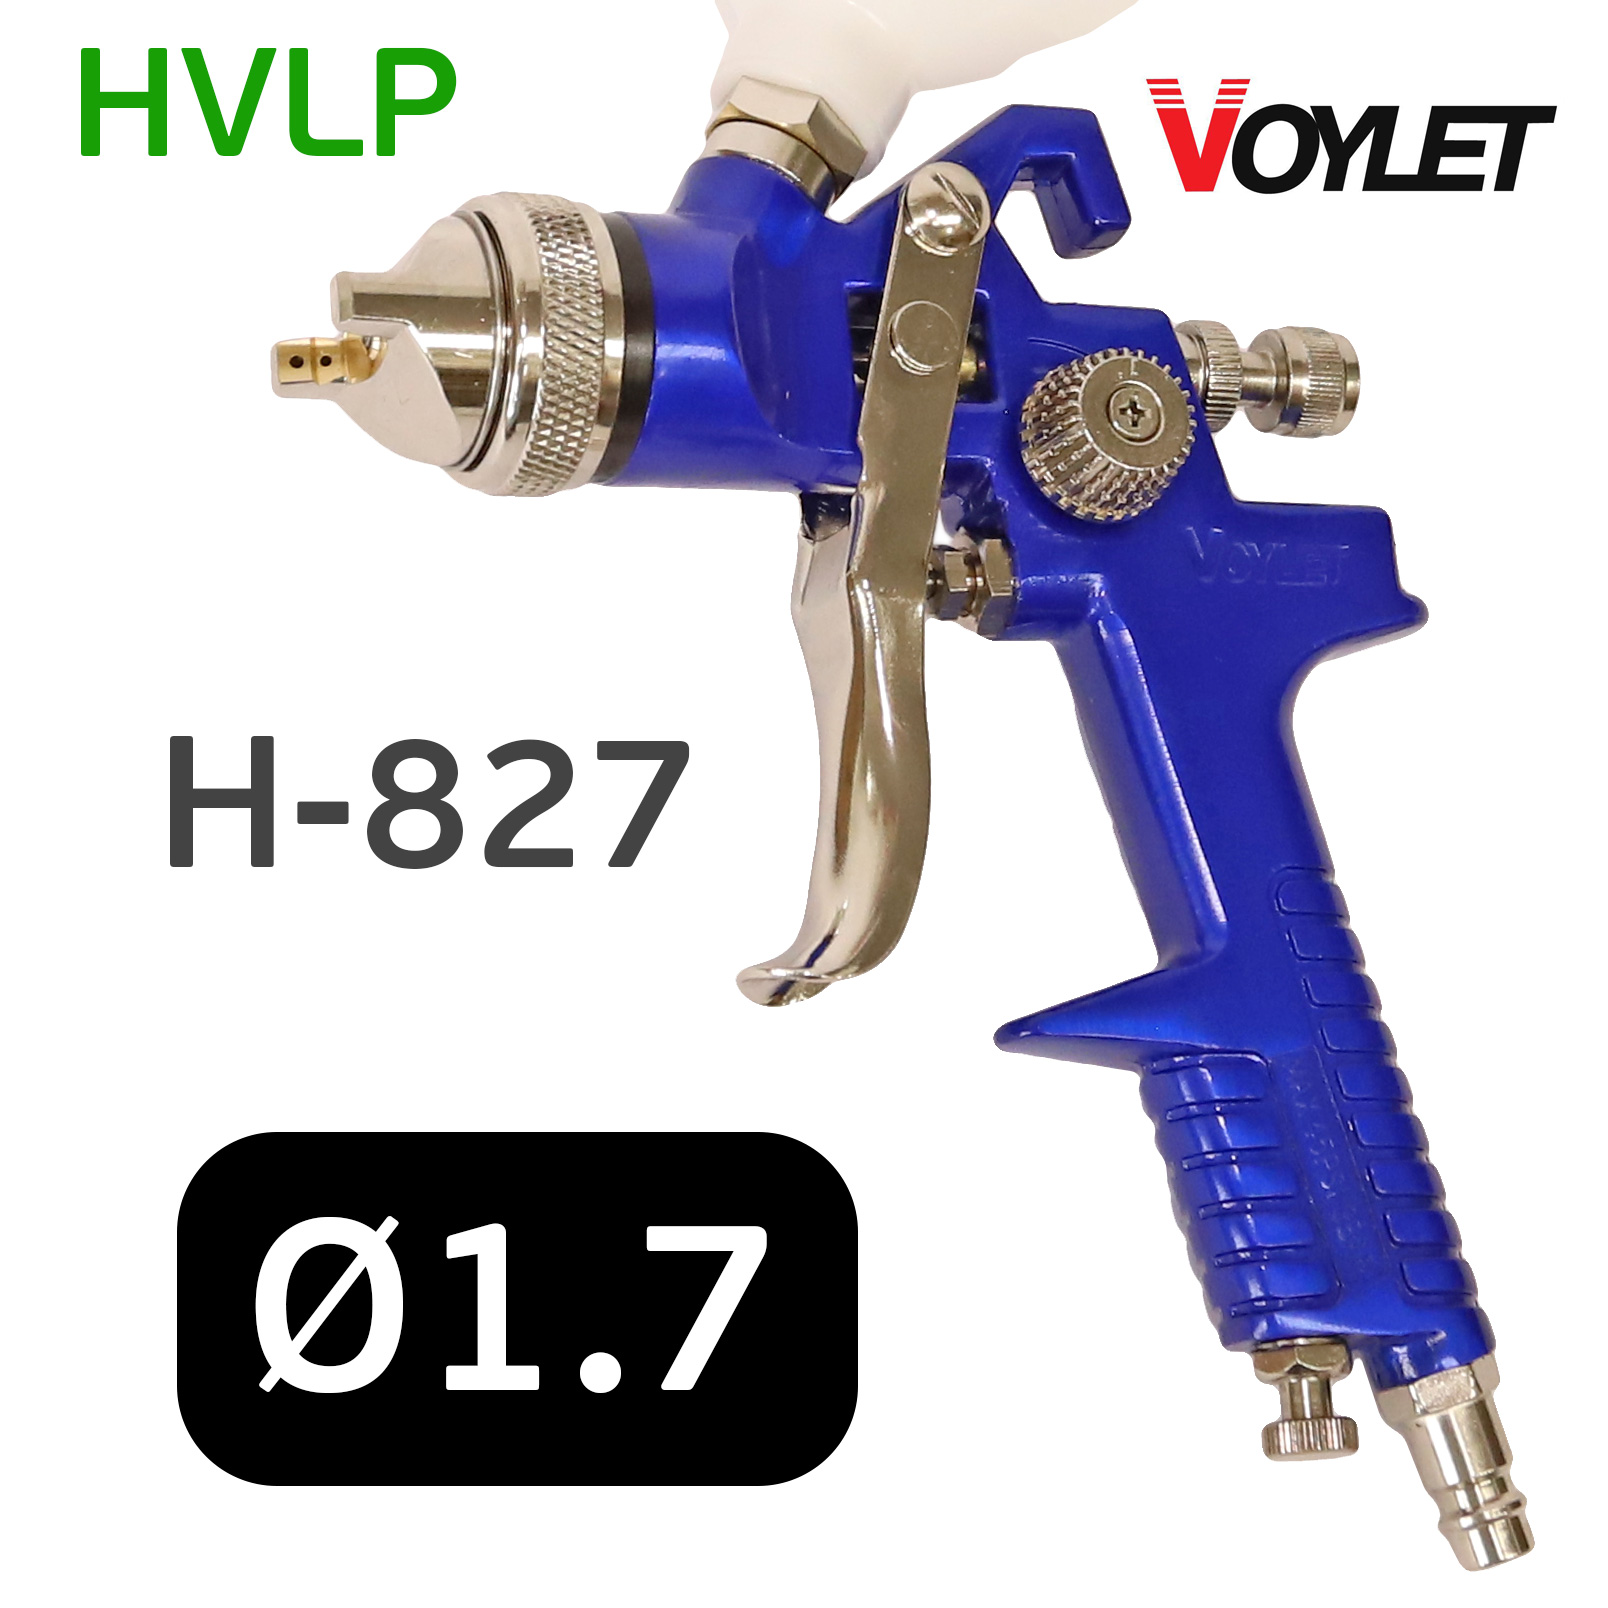  Voylet H 827 -  2